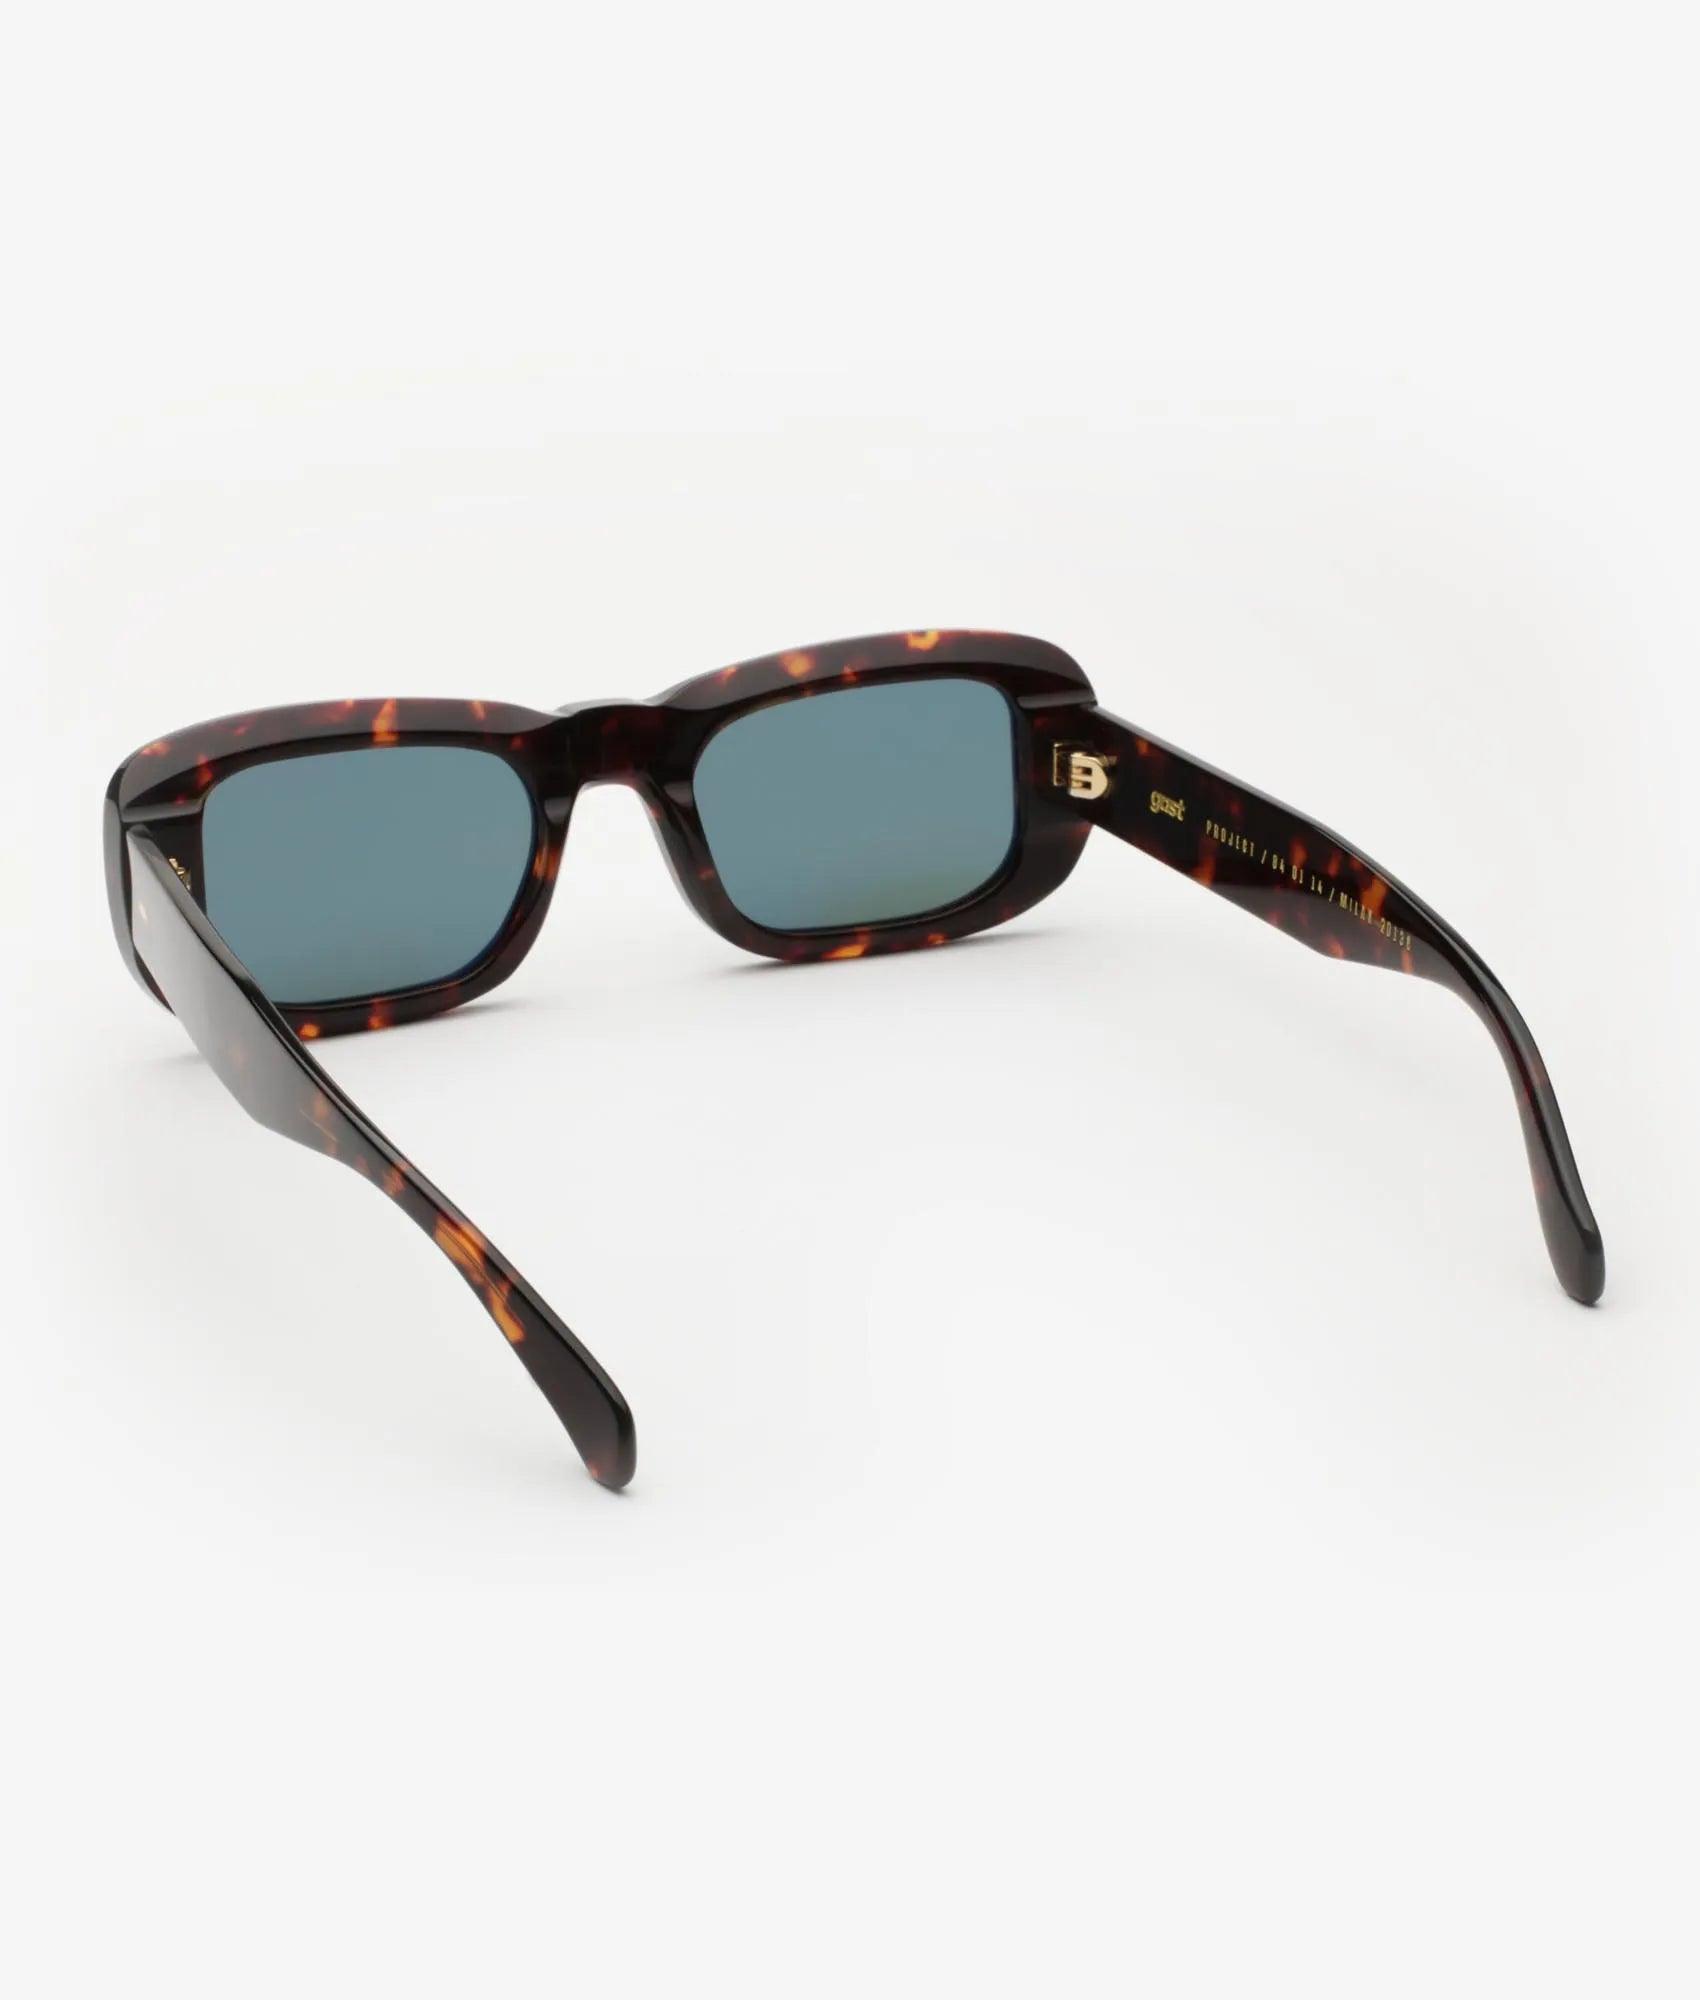 Gast Last Crush - Classic Havana - One size - Sunglasses